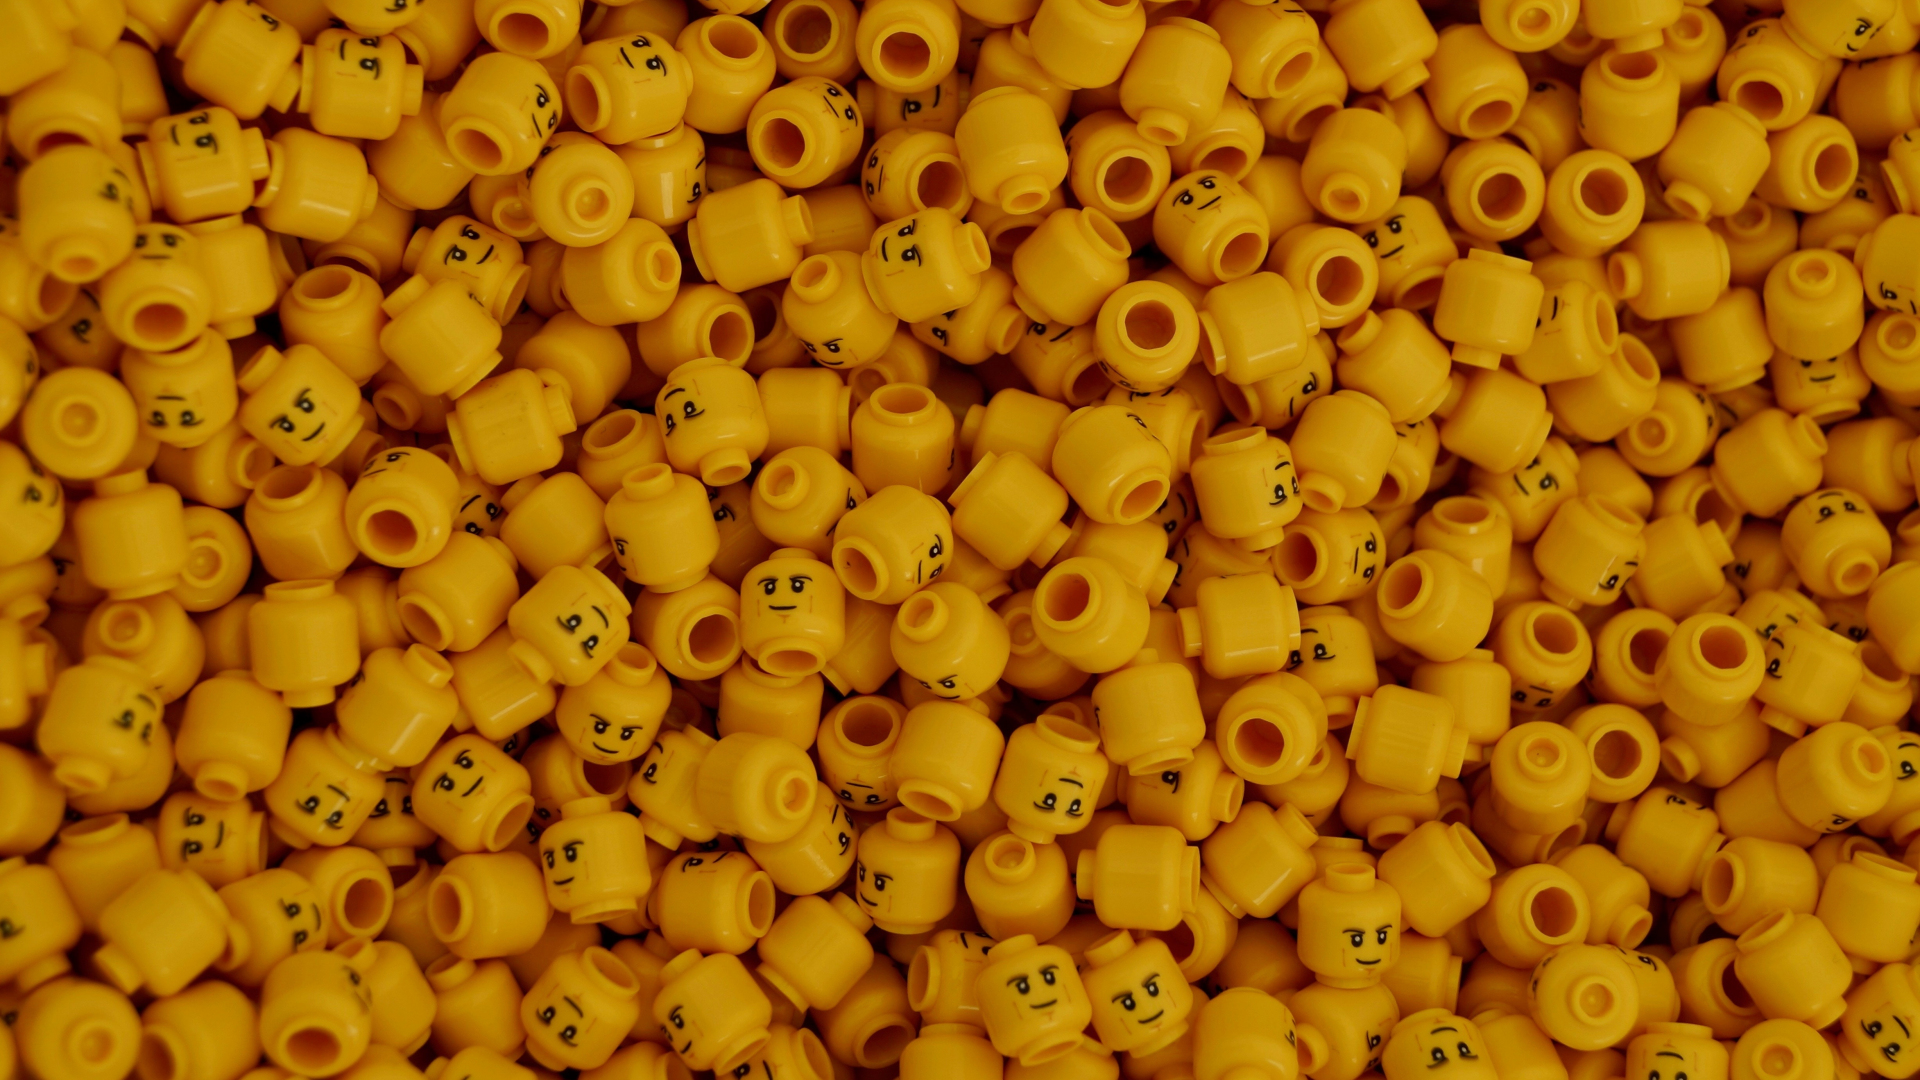 Yellow, Lego, toy, 1920x1080 wallpaper